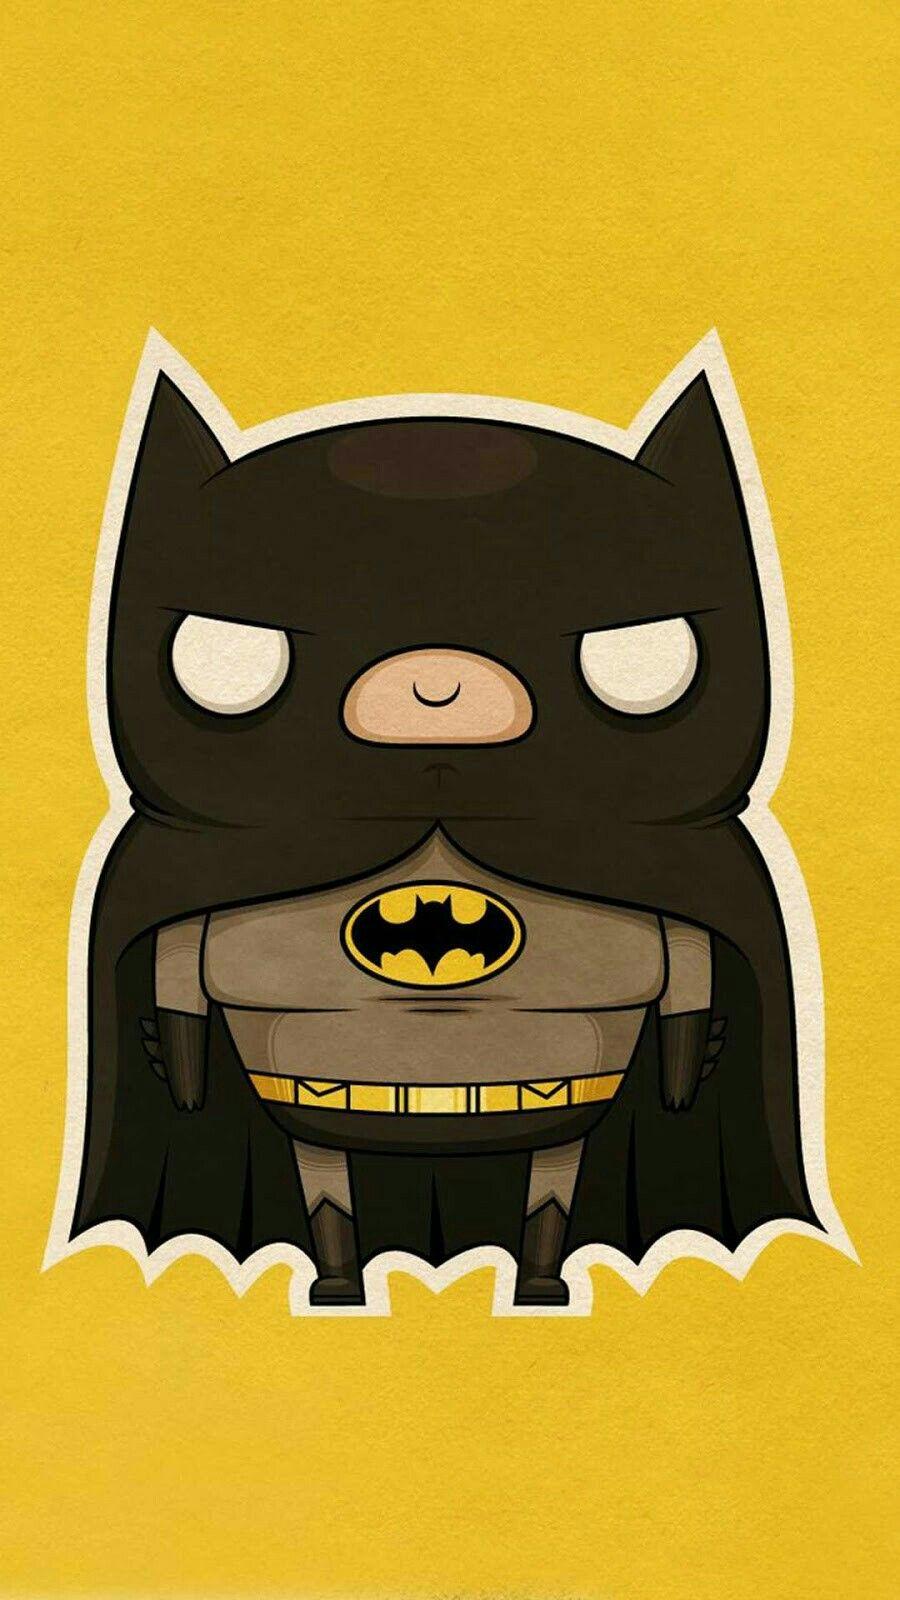 DC wallpaper ❤. Baby batman, Batman